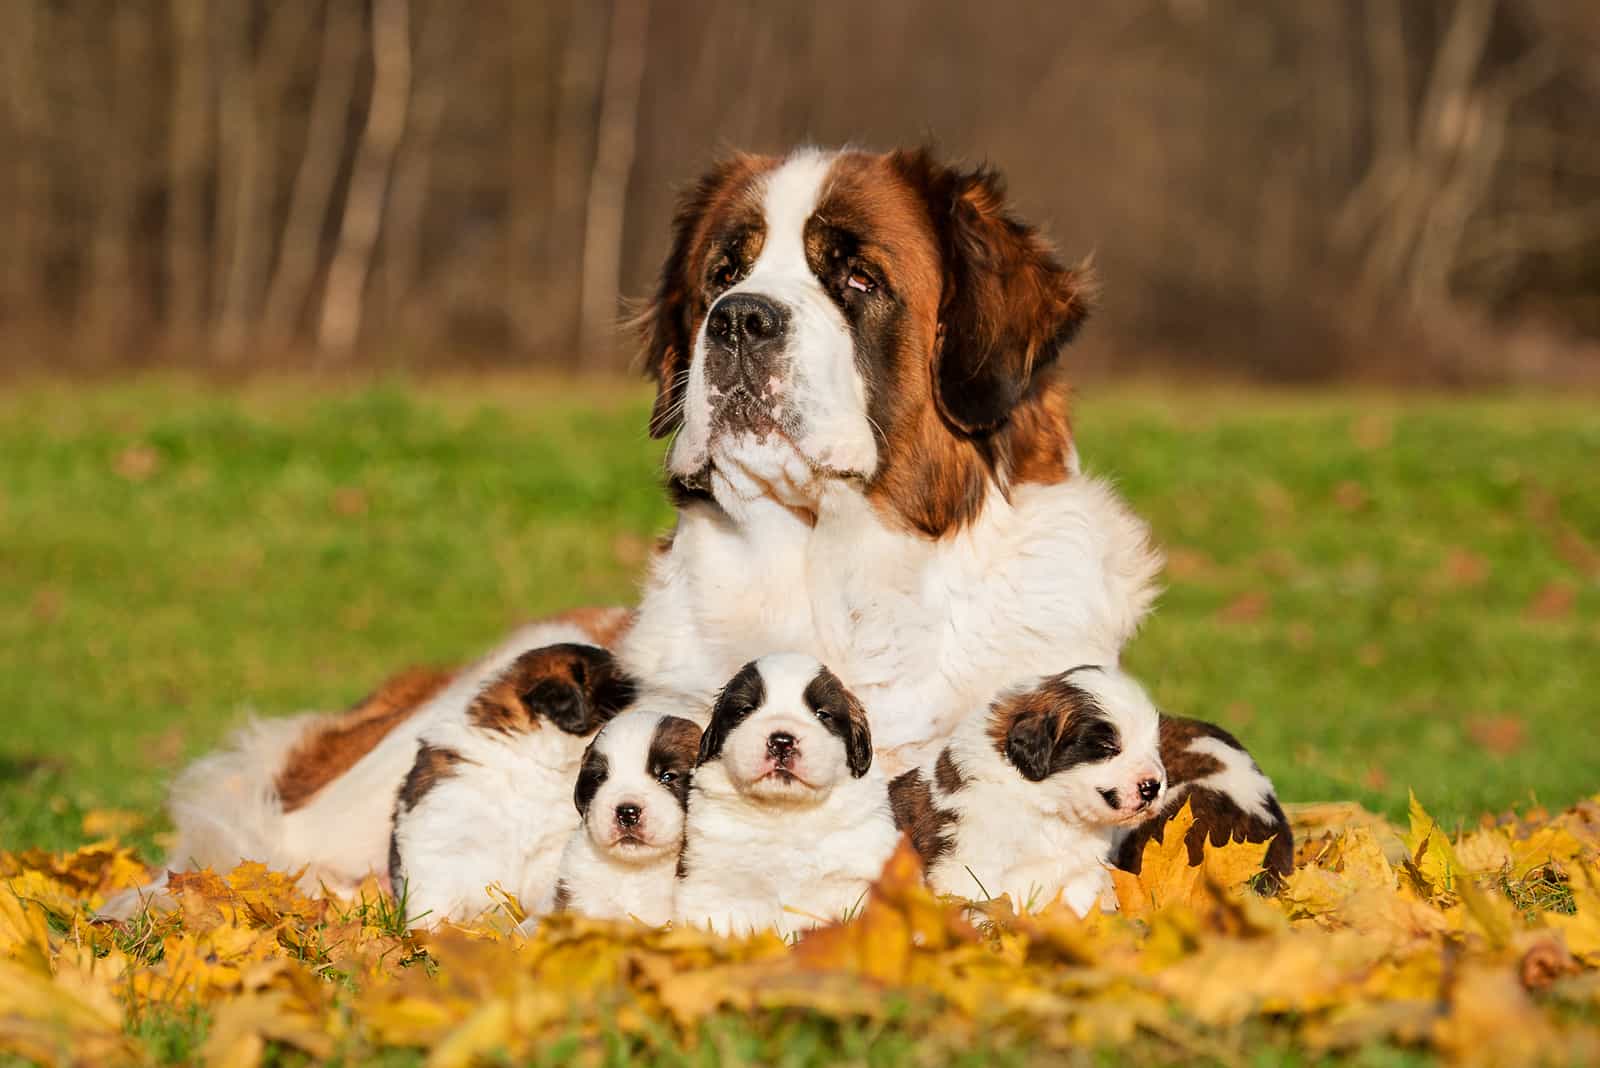 Saint bernard dog lies outside with puppies in autumn